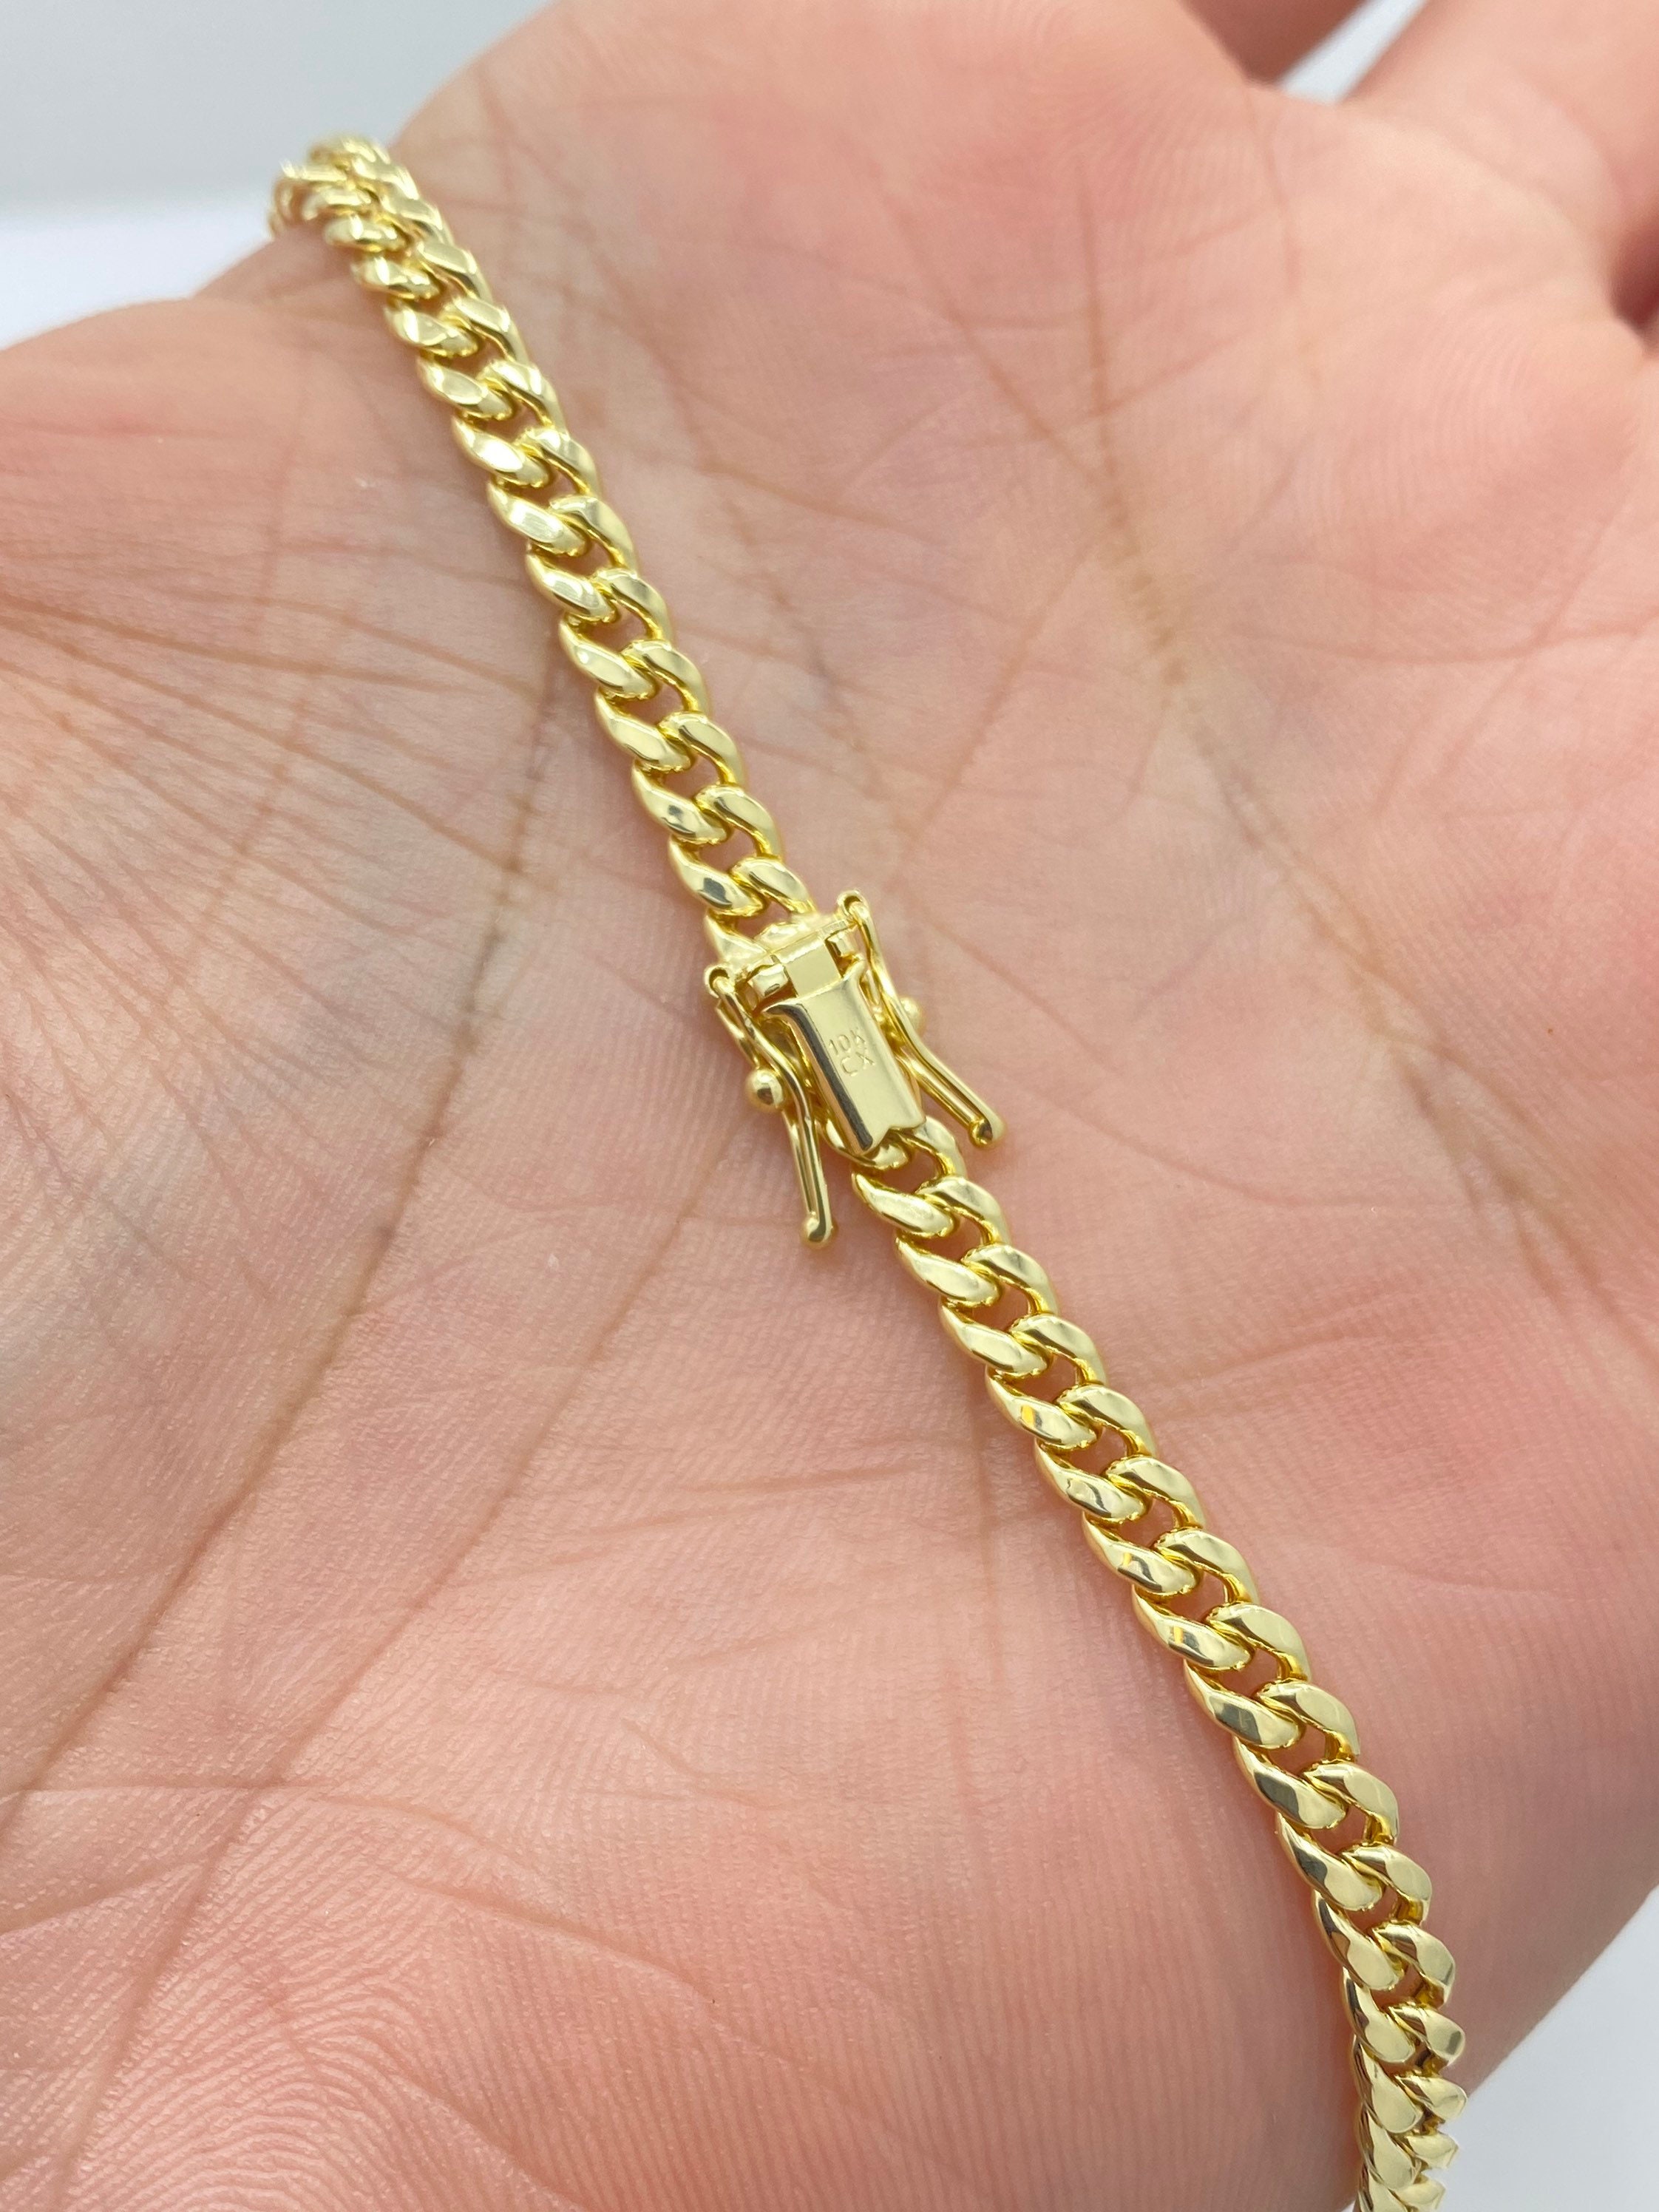 10K yellow gold Miami cuban link chain 3-